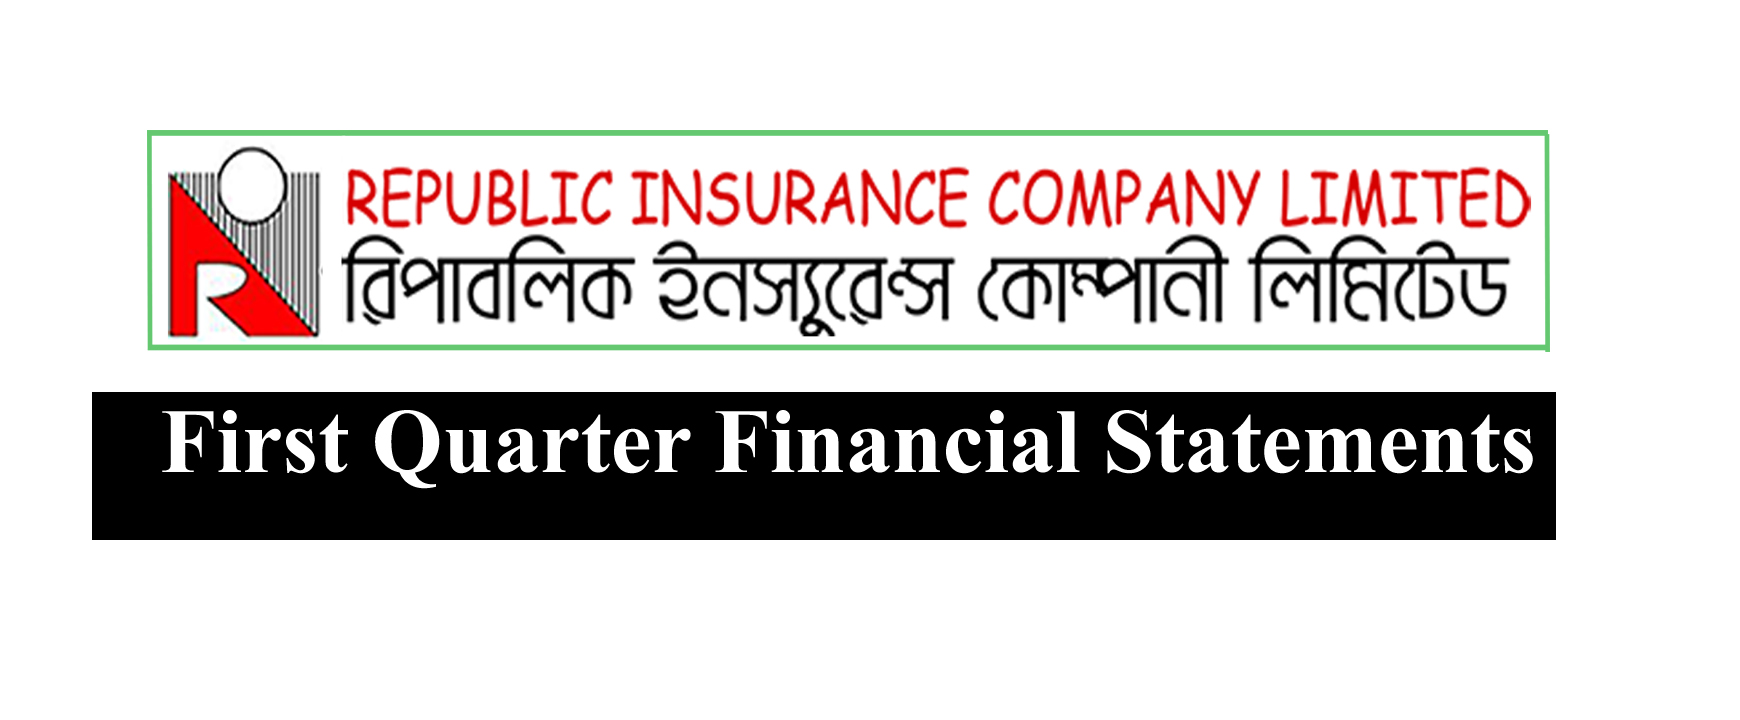 First Quarter Financial Statements oF Republic Insurance Co. Ltd